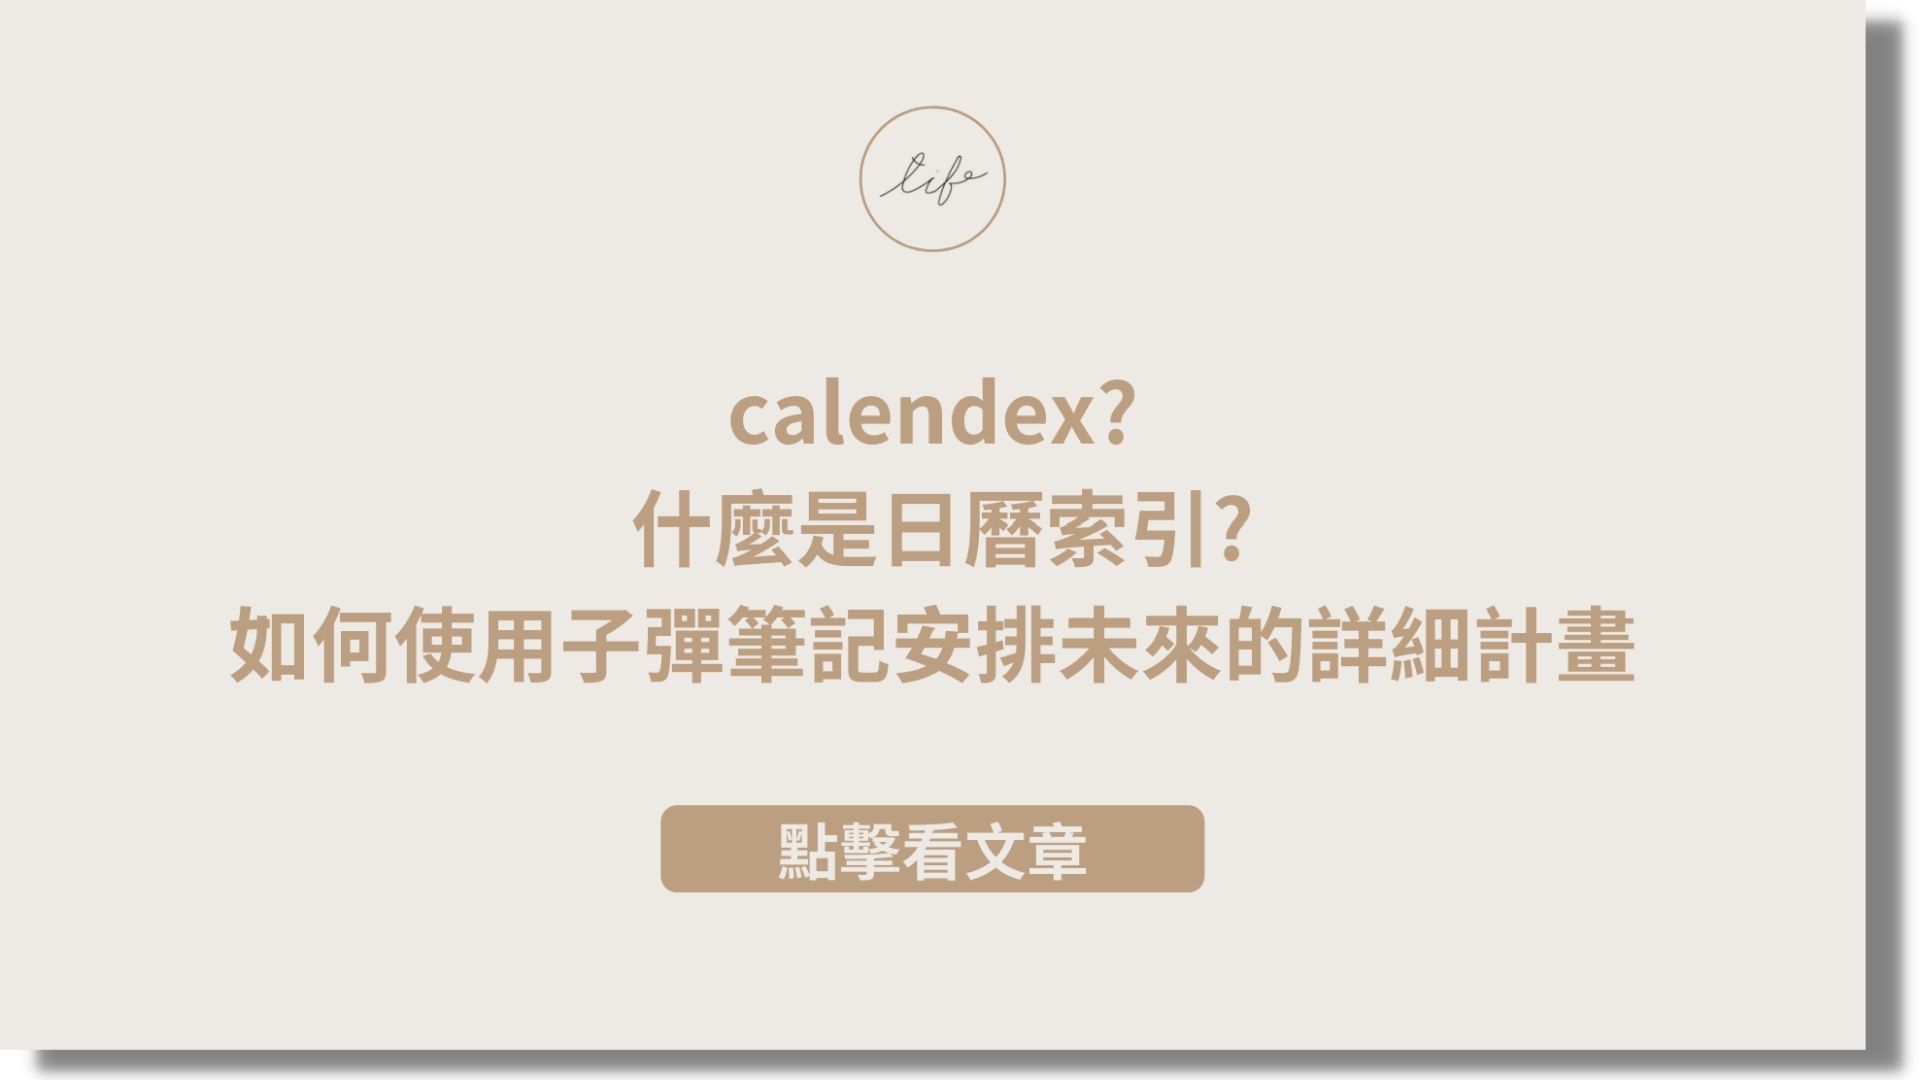 You are currently viewing calendex? 什麼是日曆索引?如何使用子彈筆記安排未來的詳細計畫